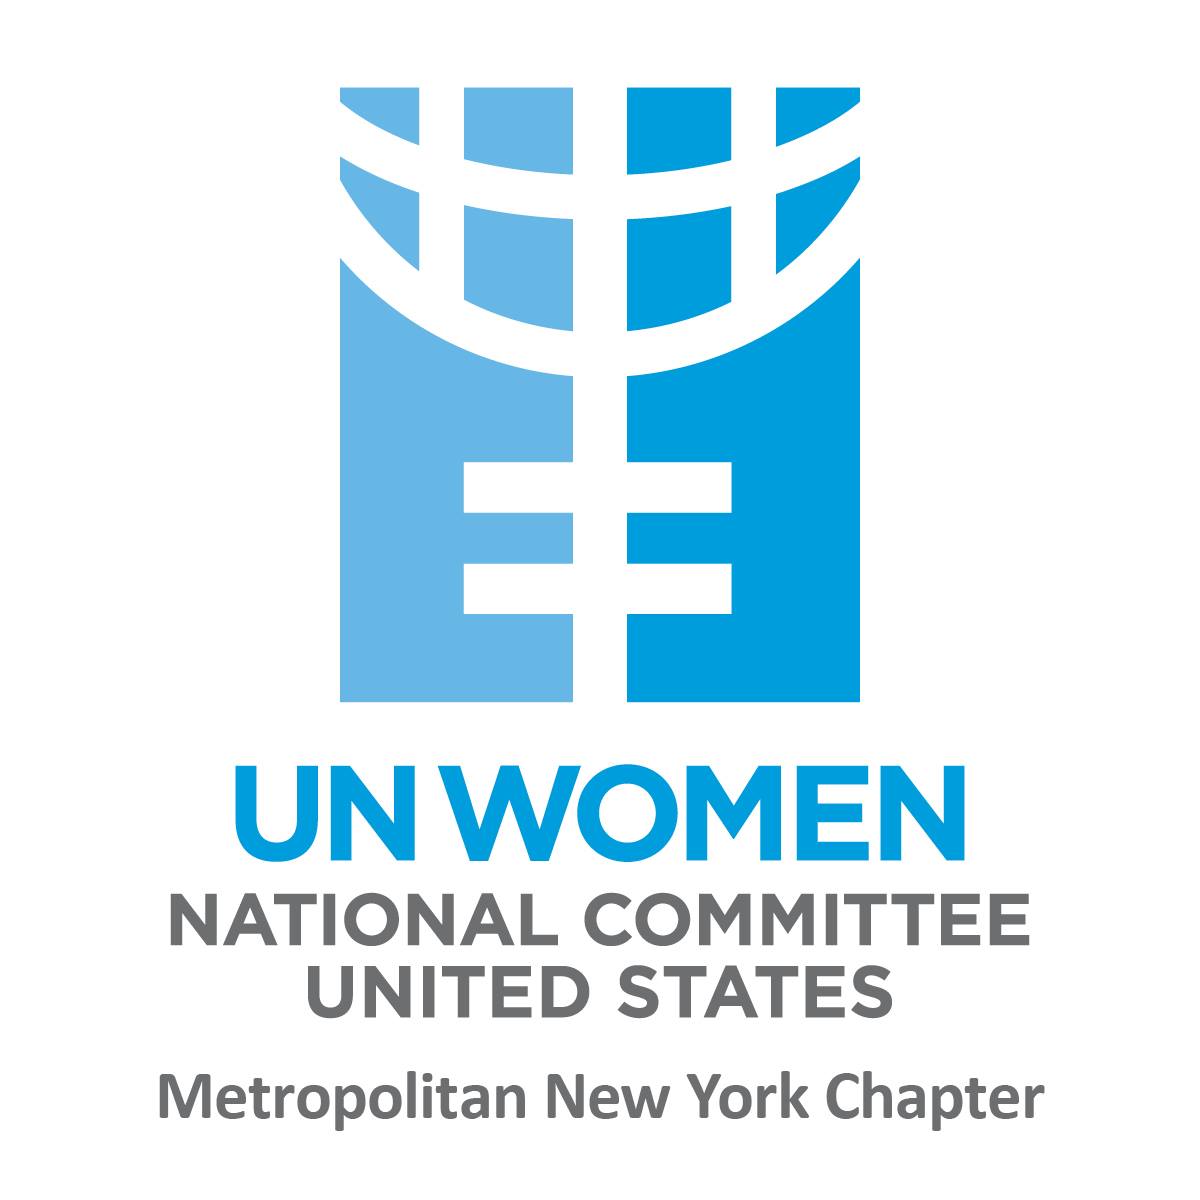 Woman Organization in New York New York - UN Women USA Metro NY Chapter